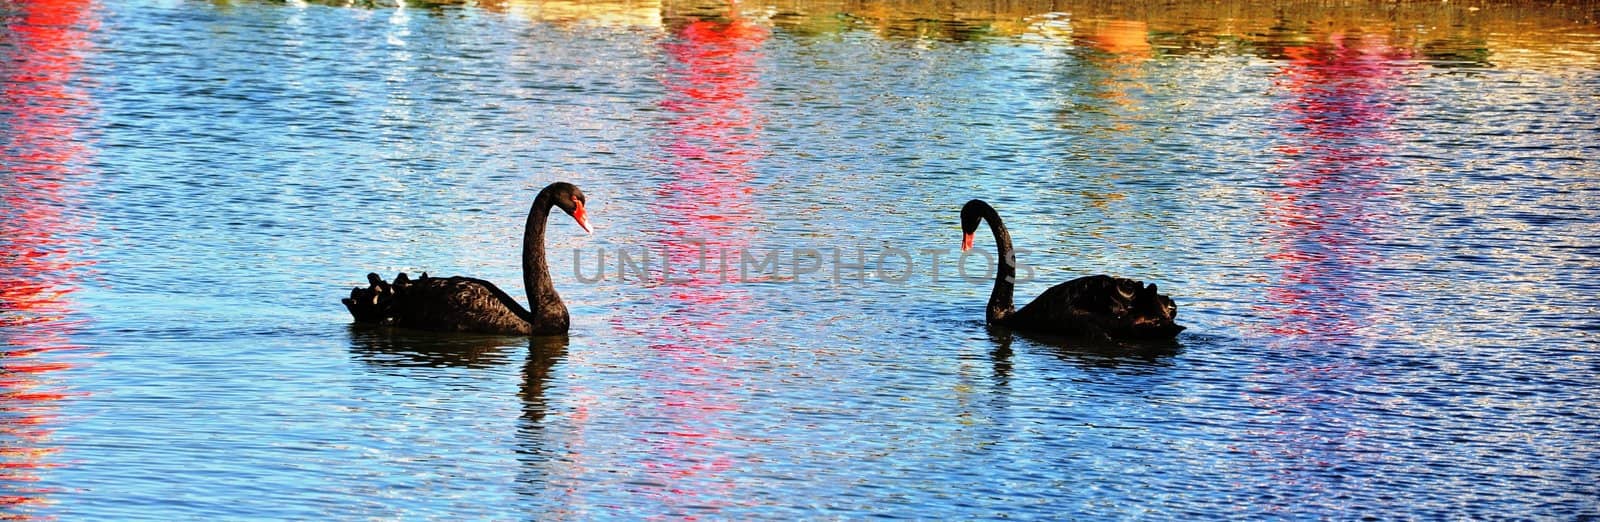 swans by vas25